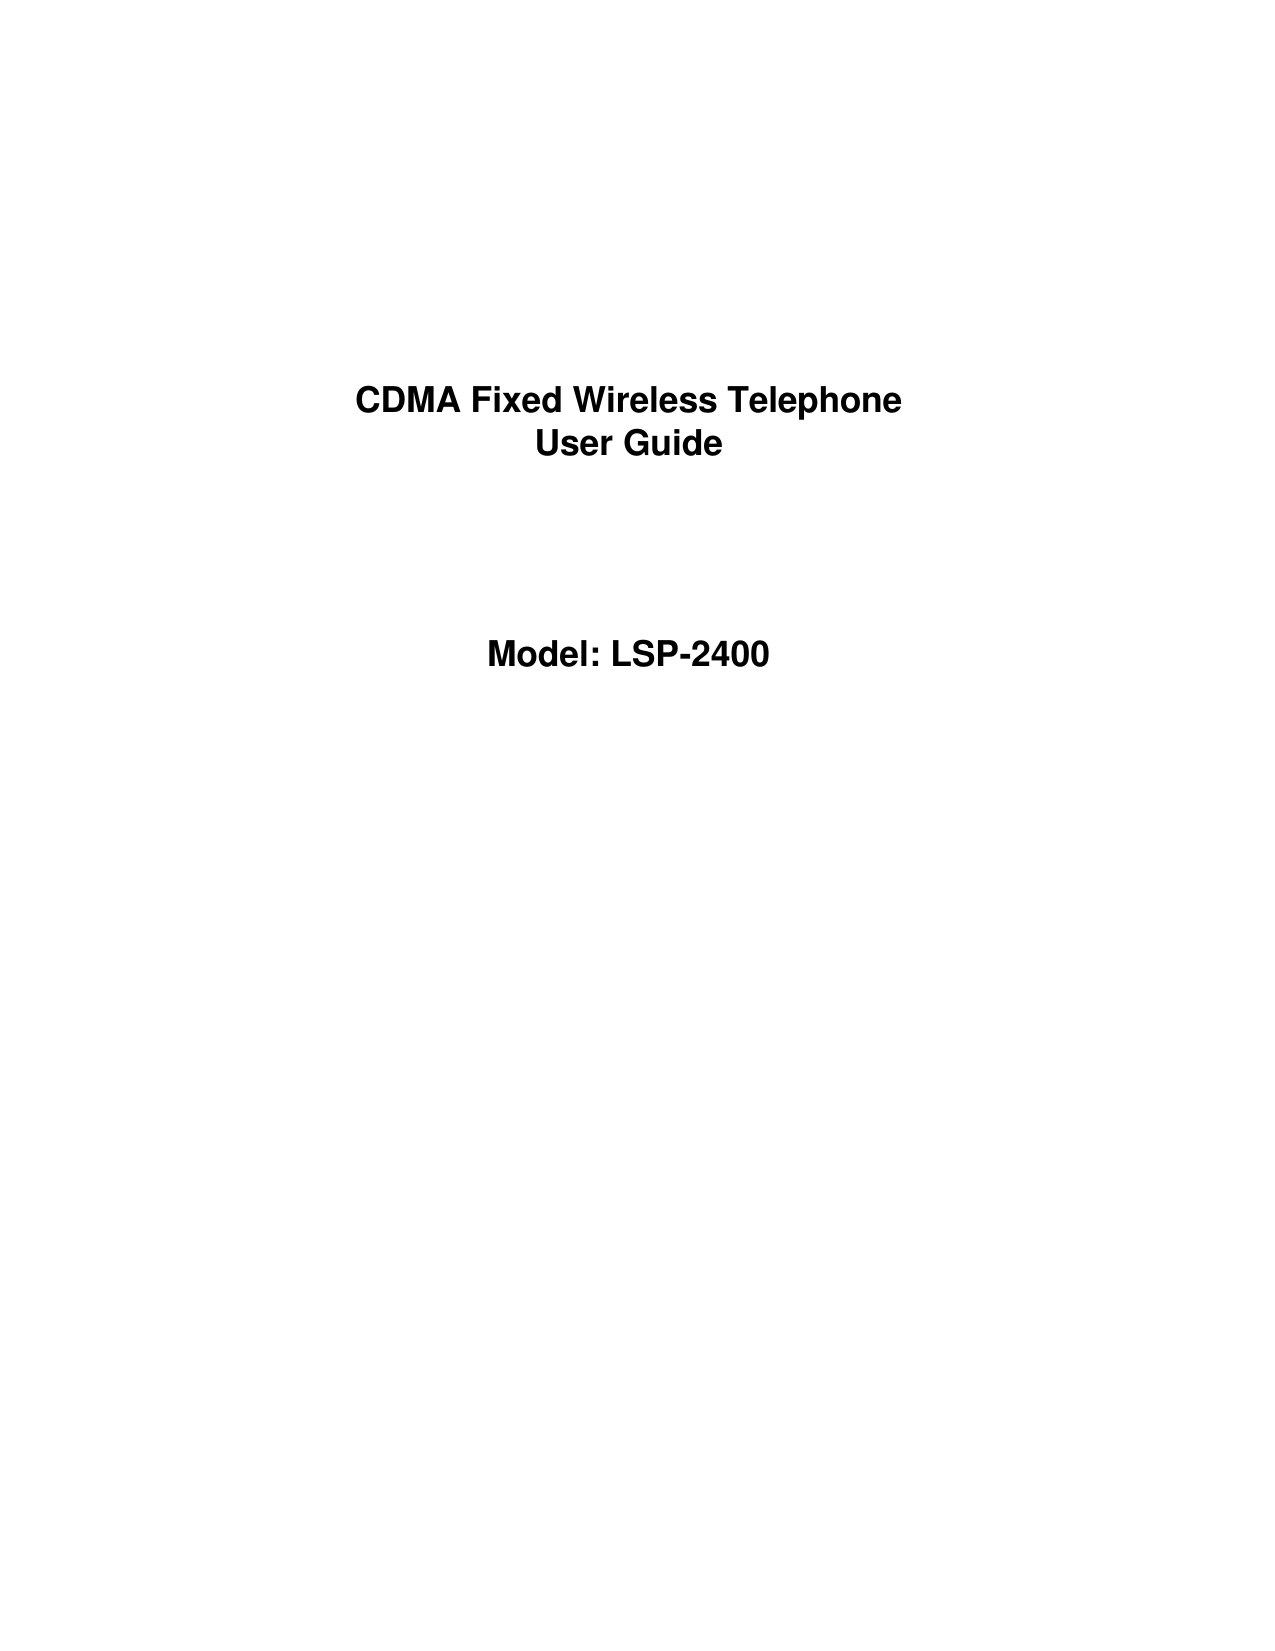 CDMA Fixed Wireless Telephone User Guide     Model: LSP-2400 